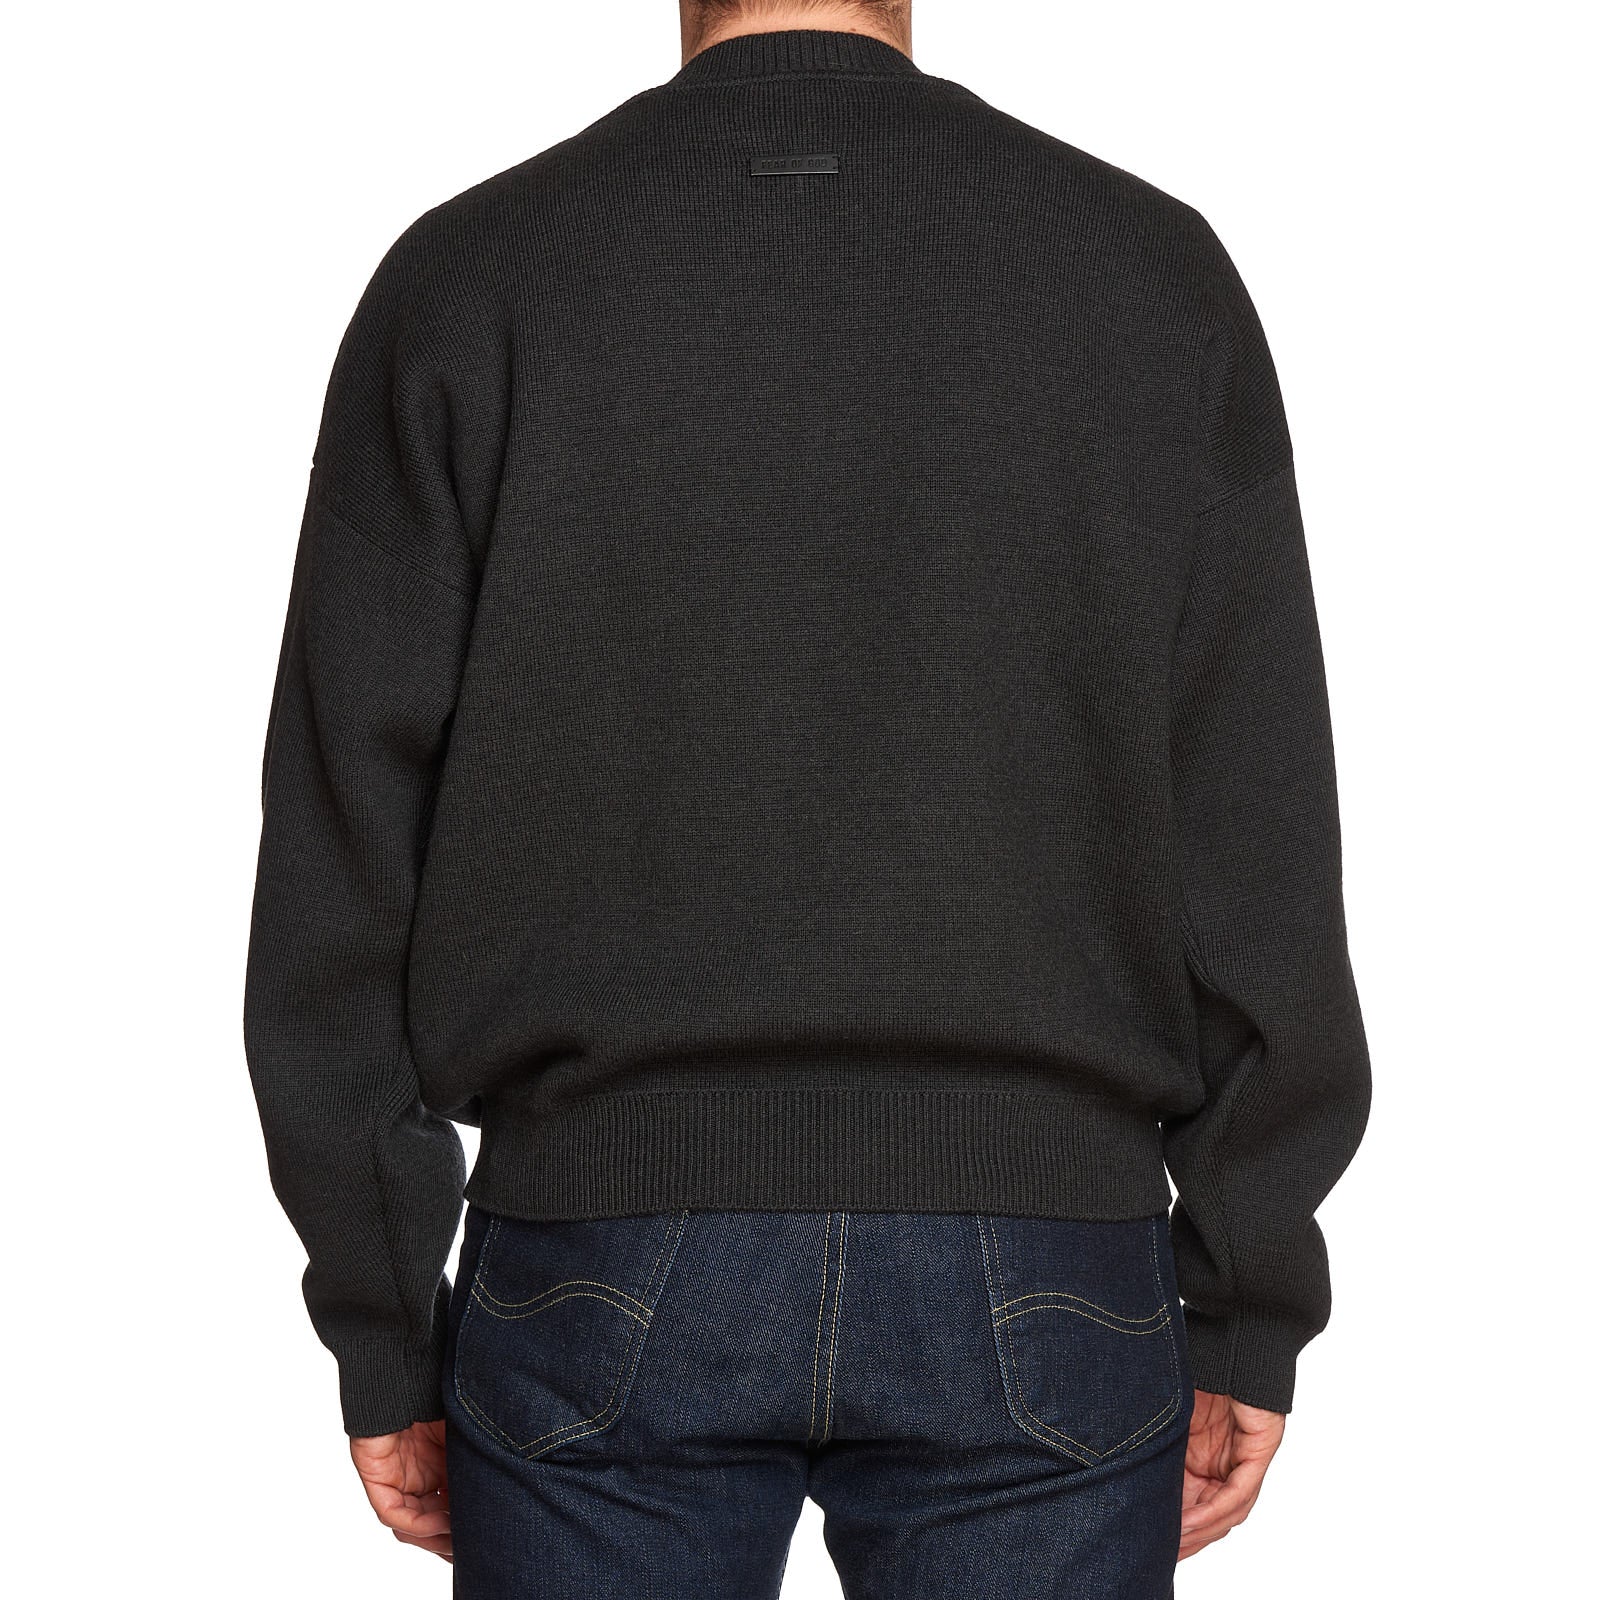 FEAR OF GOD Gray Virgin Wool Knit Crewneck Sweater NEW Size L